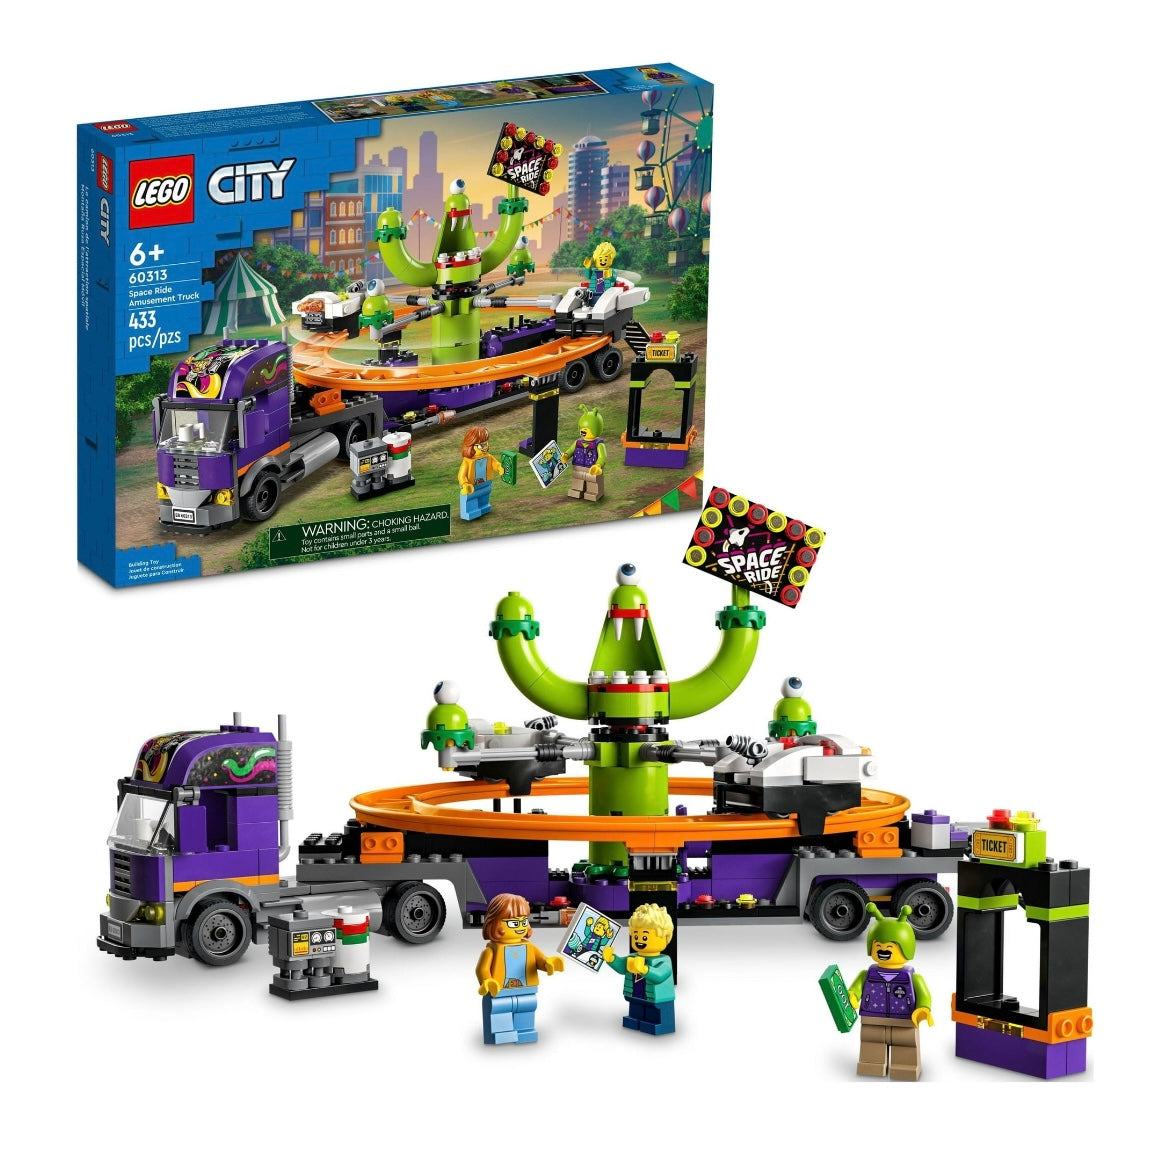 Lego and Mega Building Blocks Sets